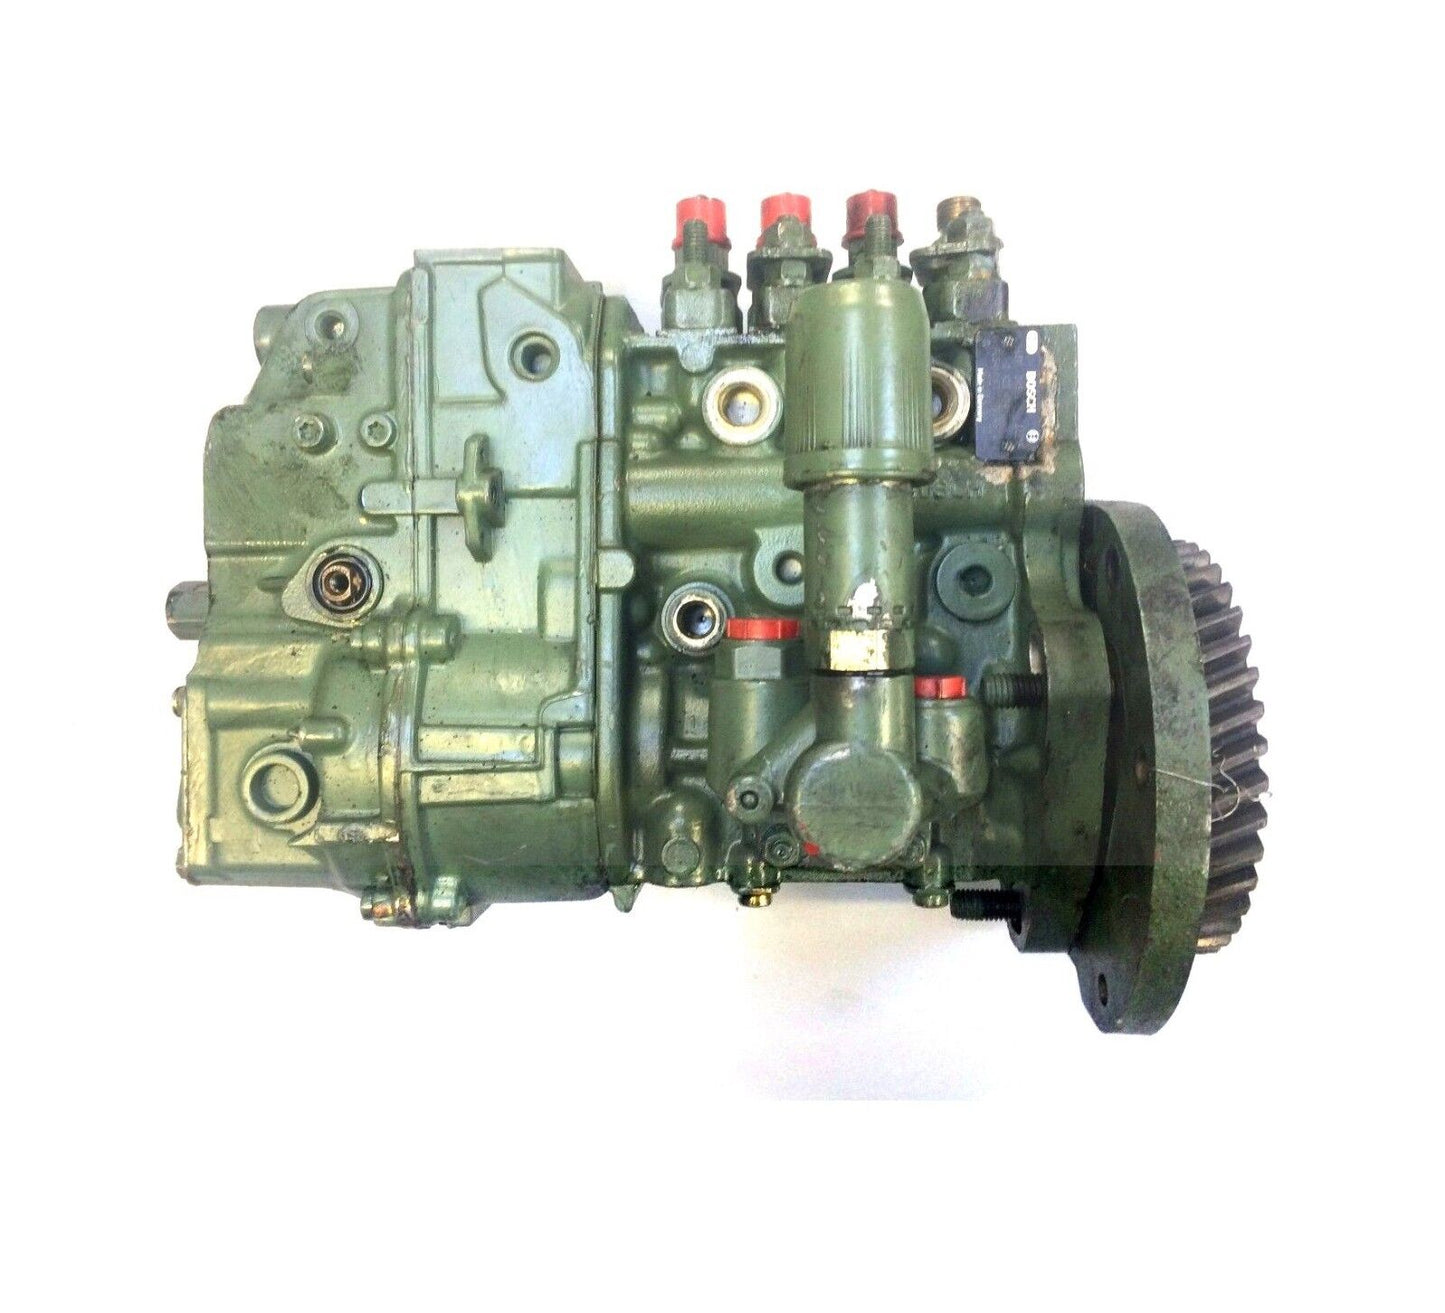 GK208 Gasket kits Bosch Pump PES4A 80/90D  1417010002